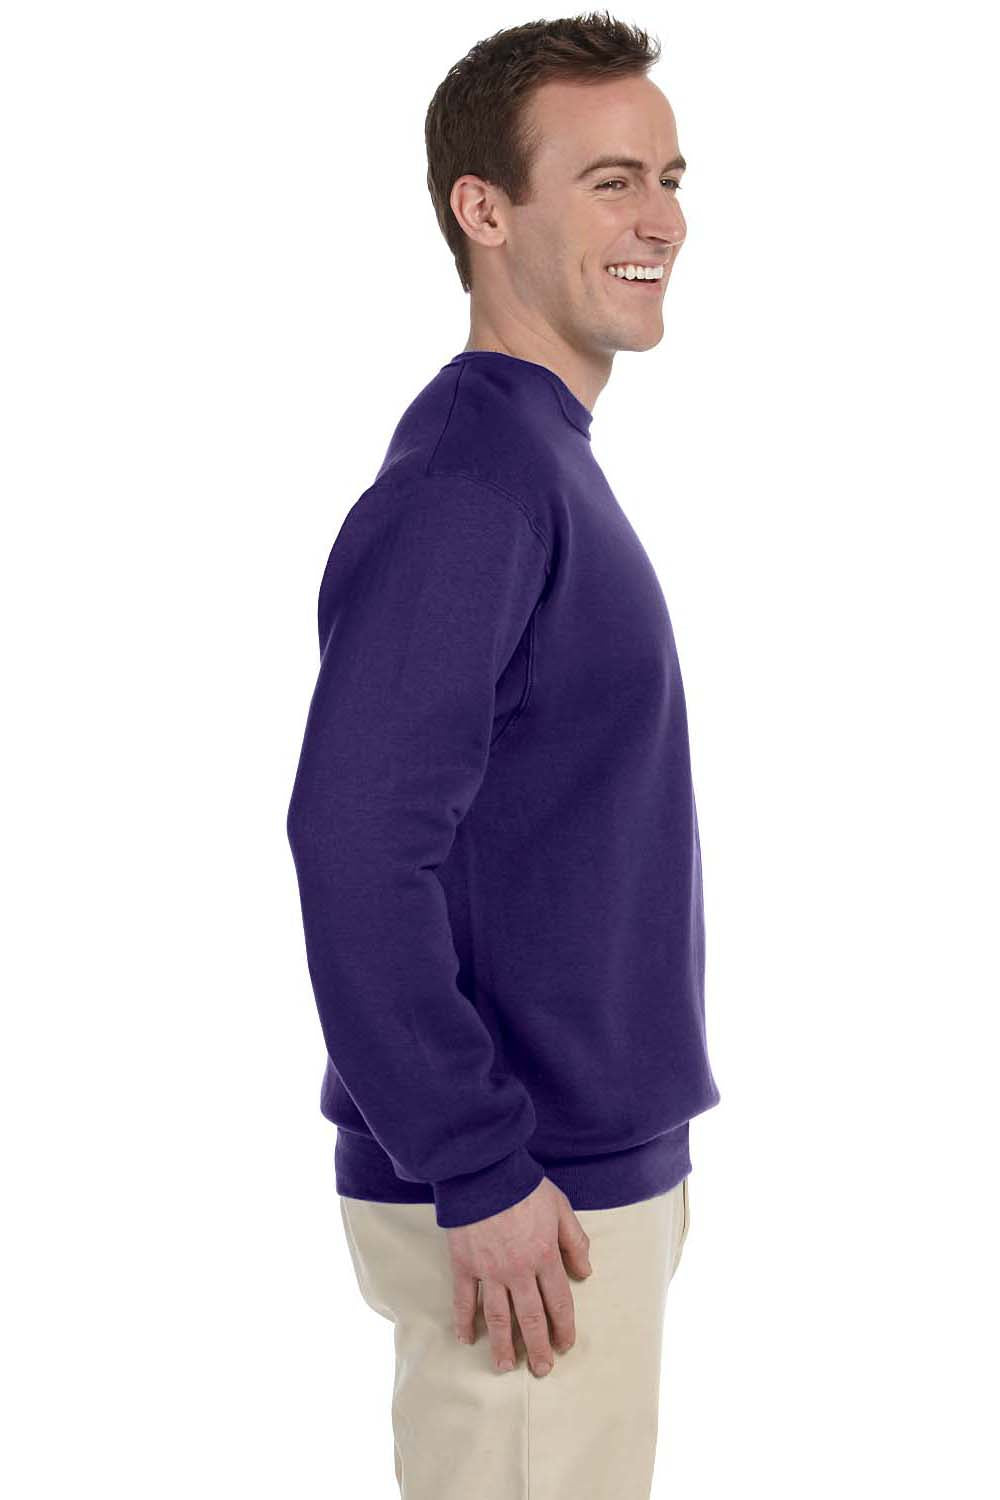 Jerzees 562 Mens NuBlend Fleece Crewneck Sweatshirt Purple Side